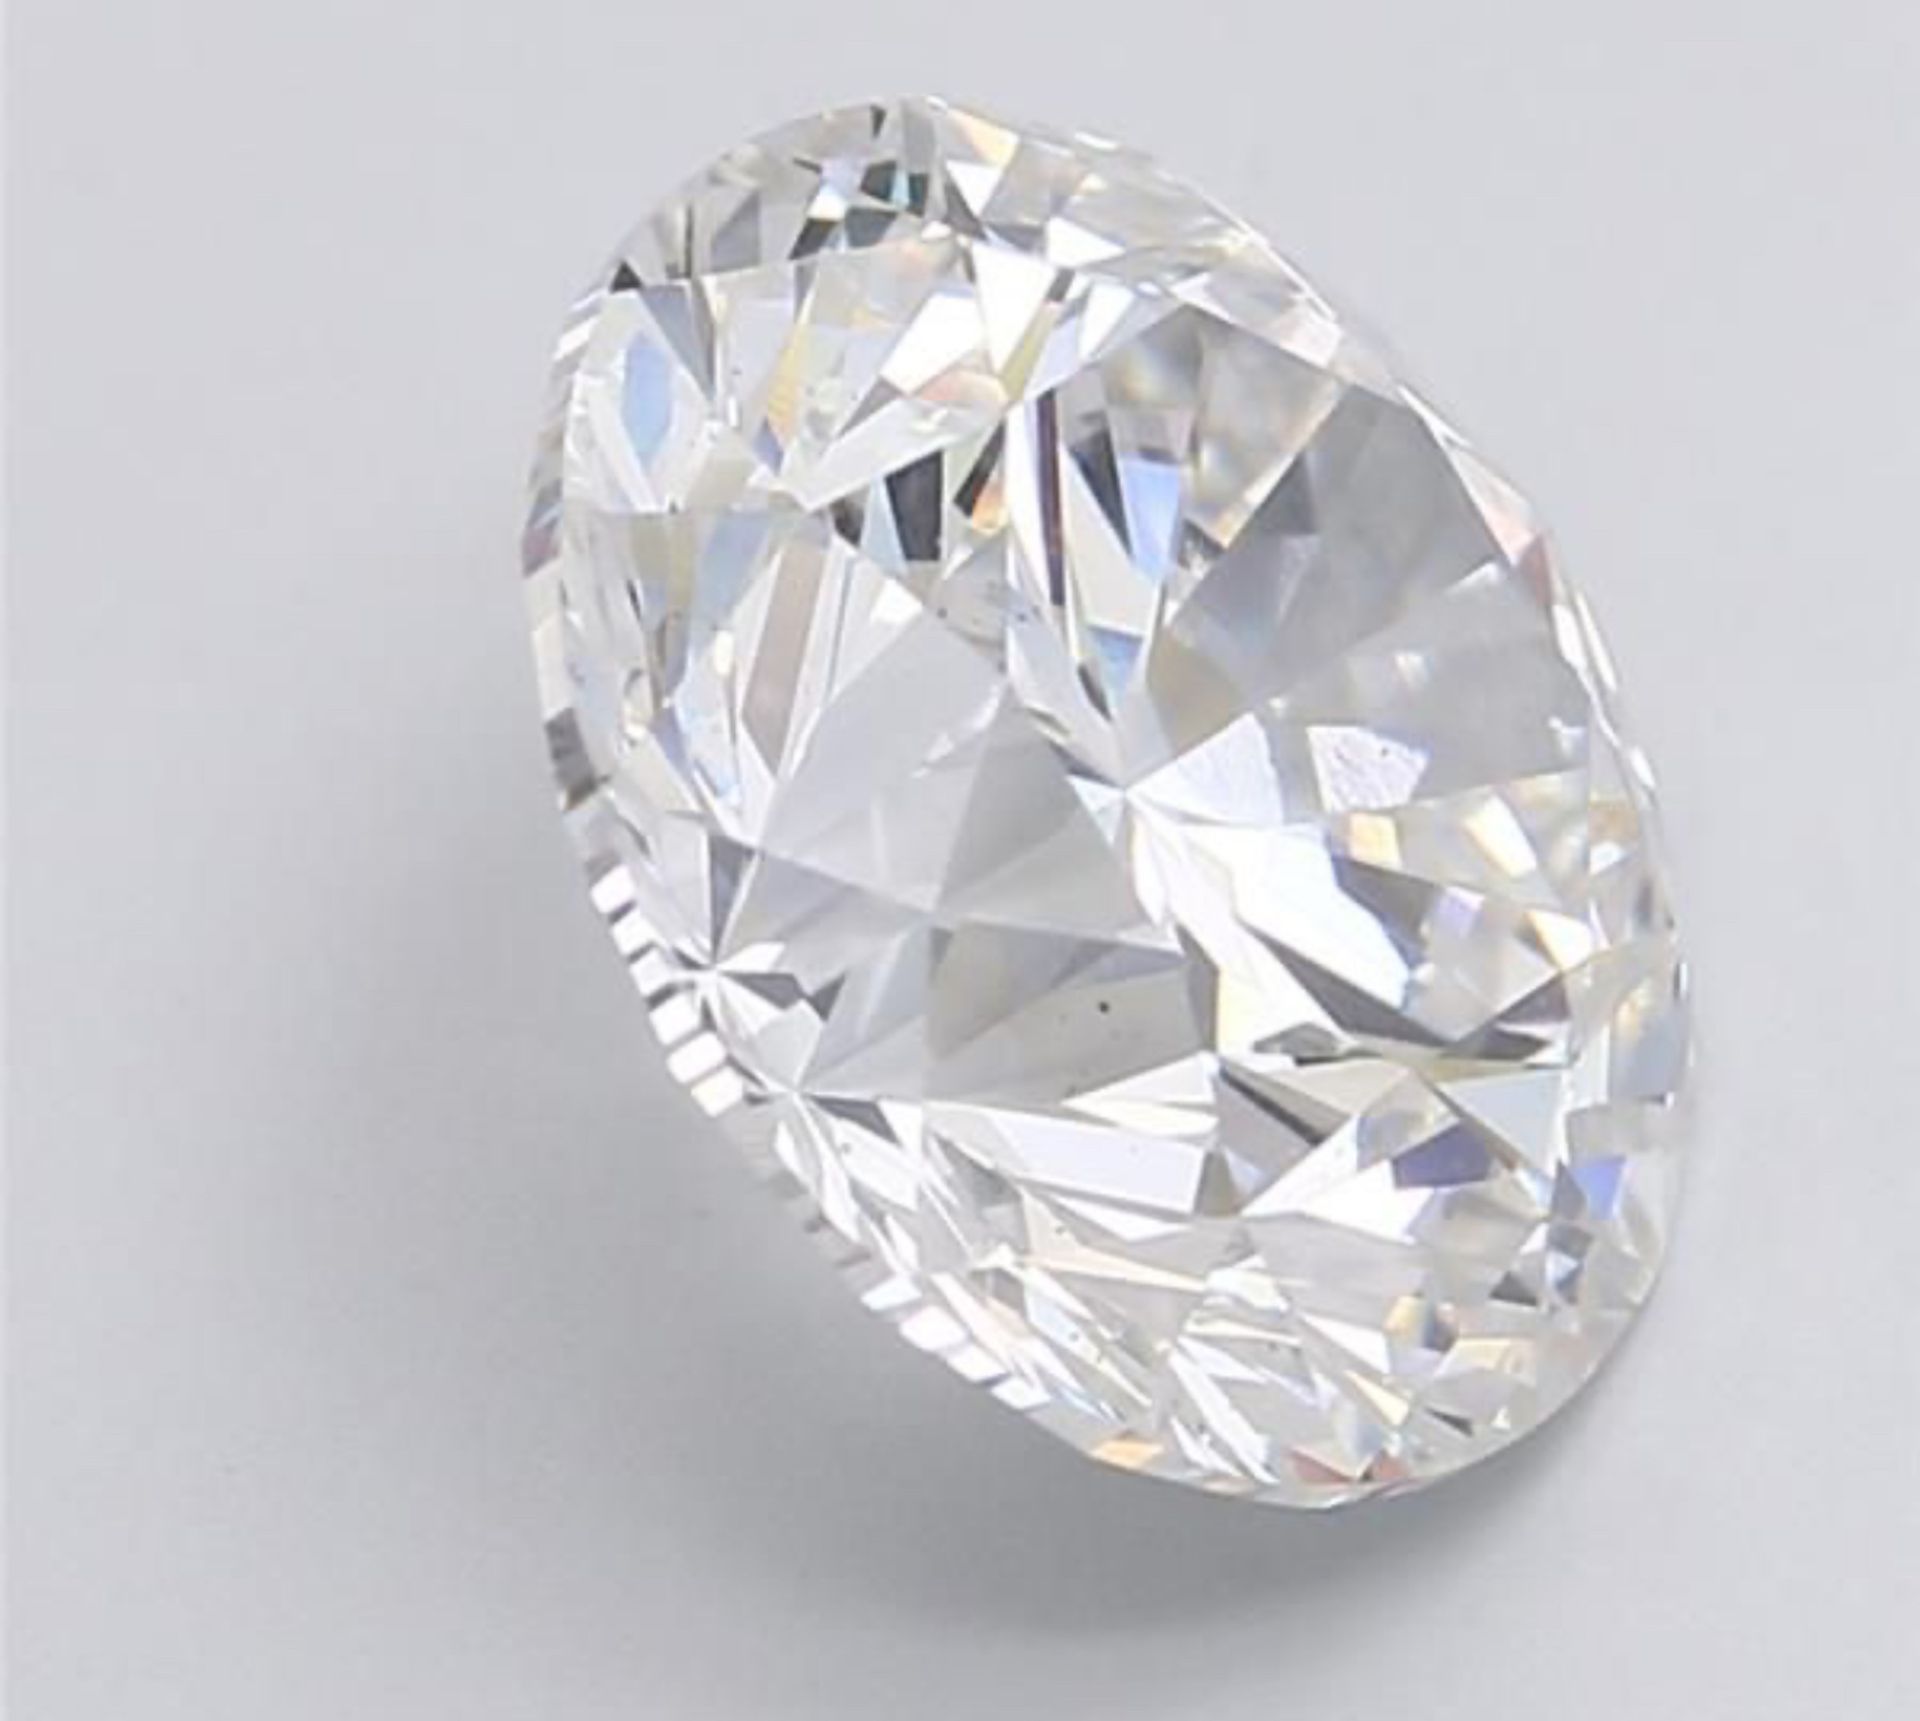 ** ON SALE ** Round Brilliant Cut Diamond 1.00 Carat D Colour VVS1 Clarity - IGI Certificate - Image 4 of 6